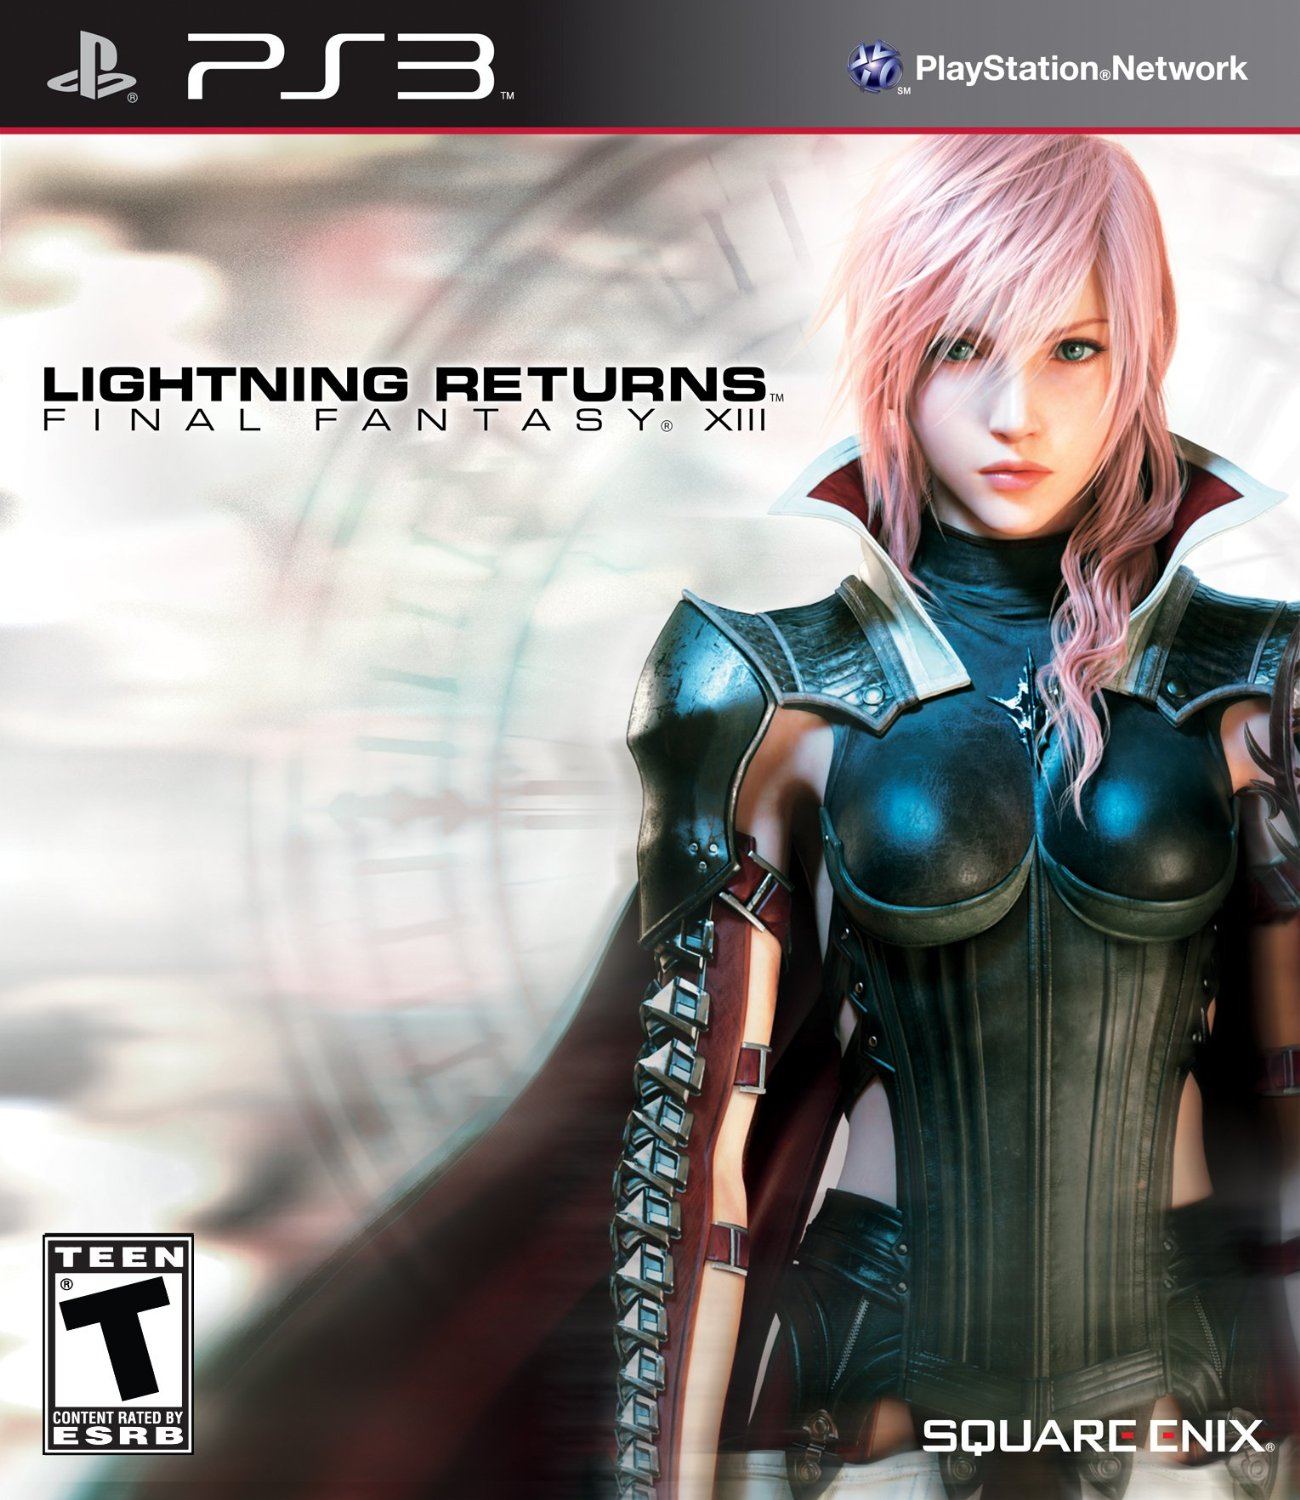 lightning returns final fantasy xiii cheat engine download